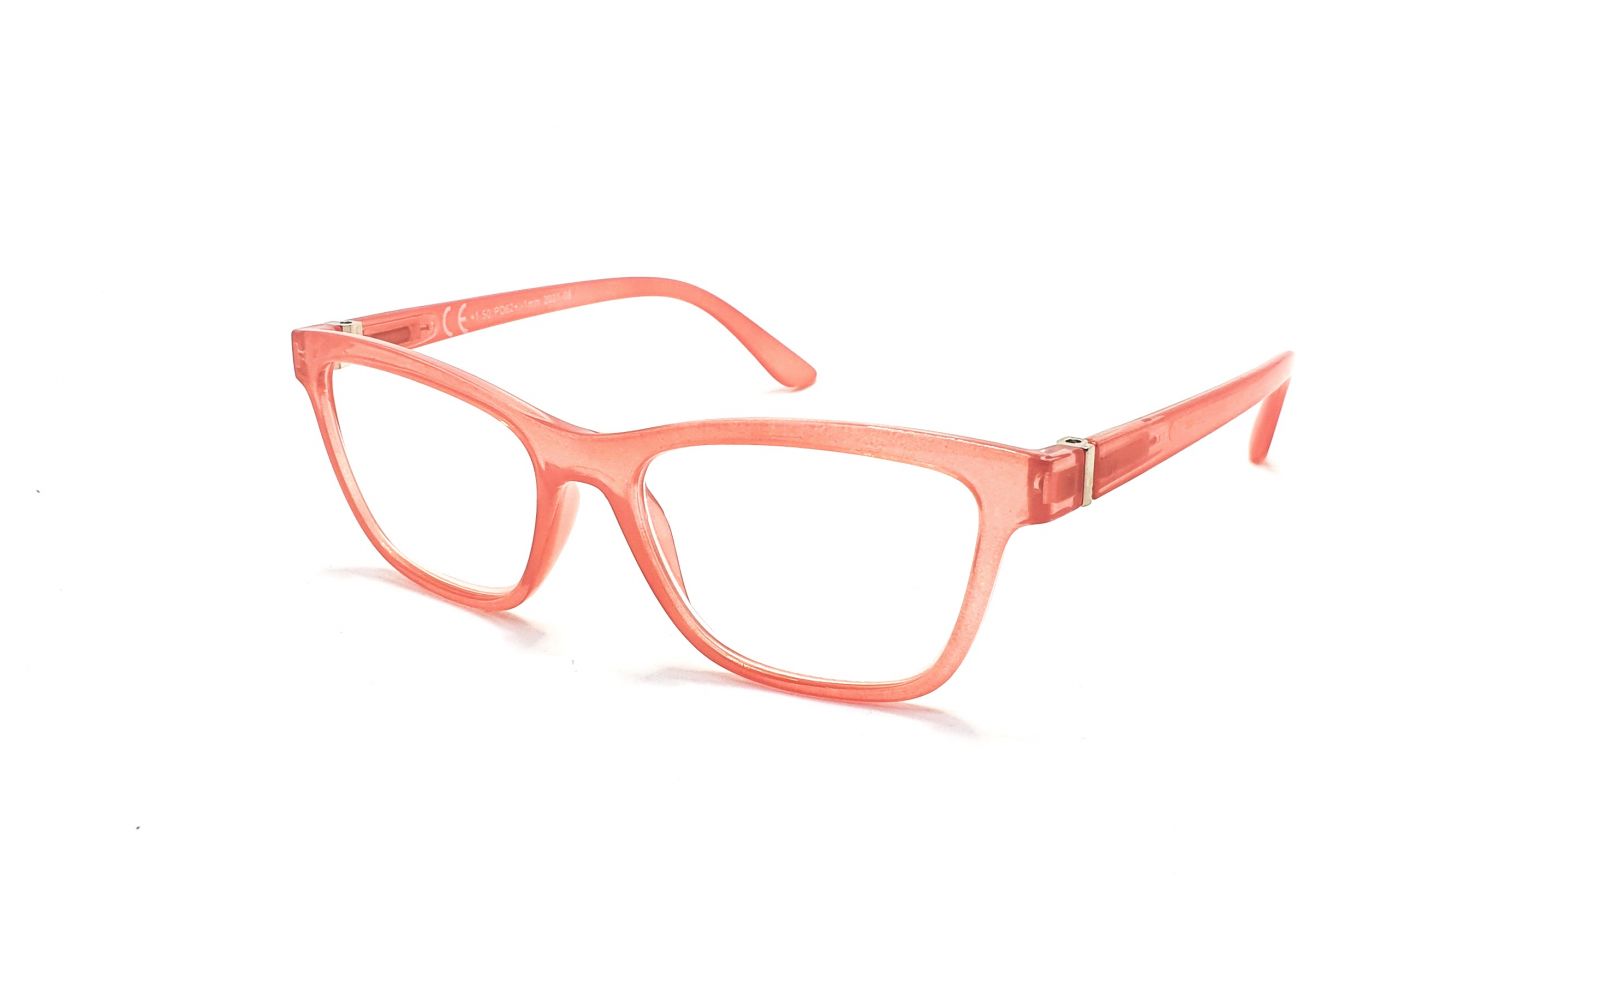 Dioptrické brýle R6225 / +2,50 flex pink